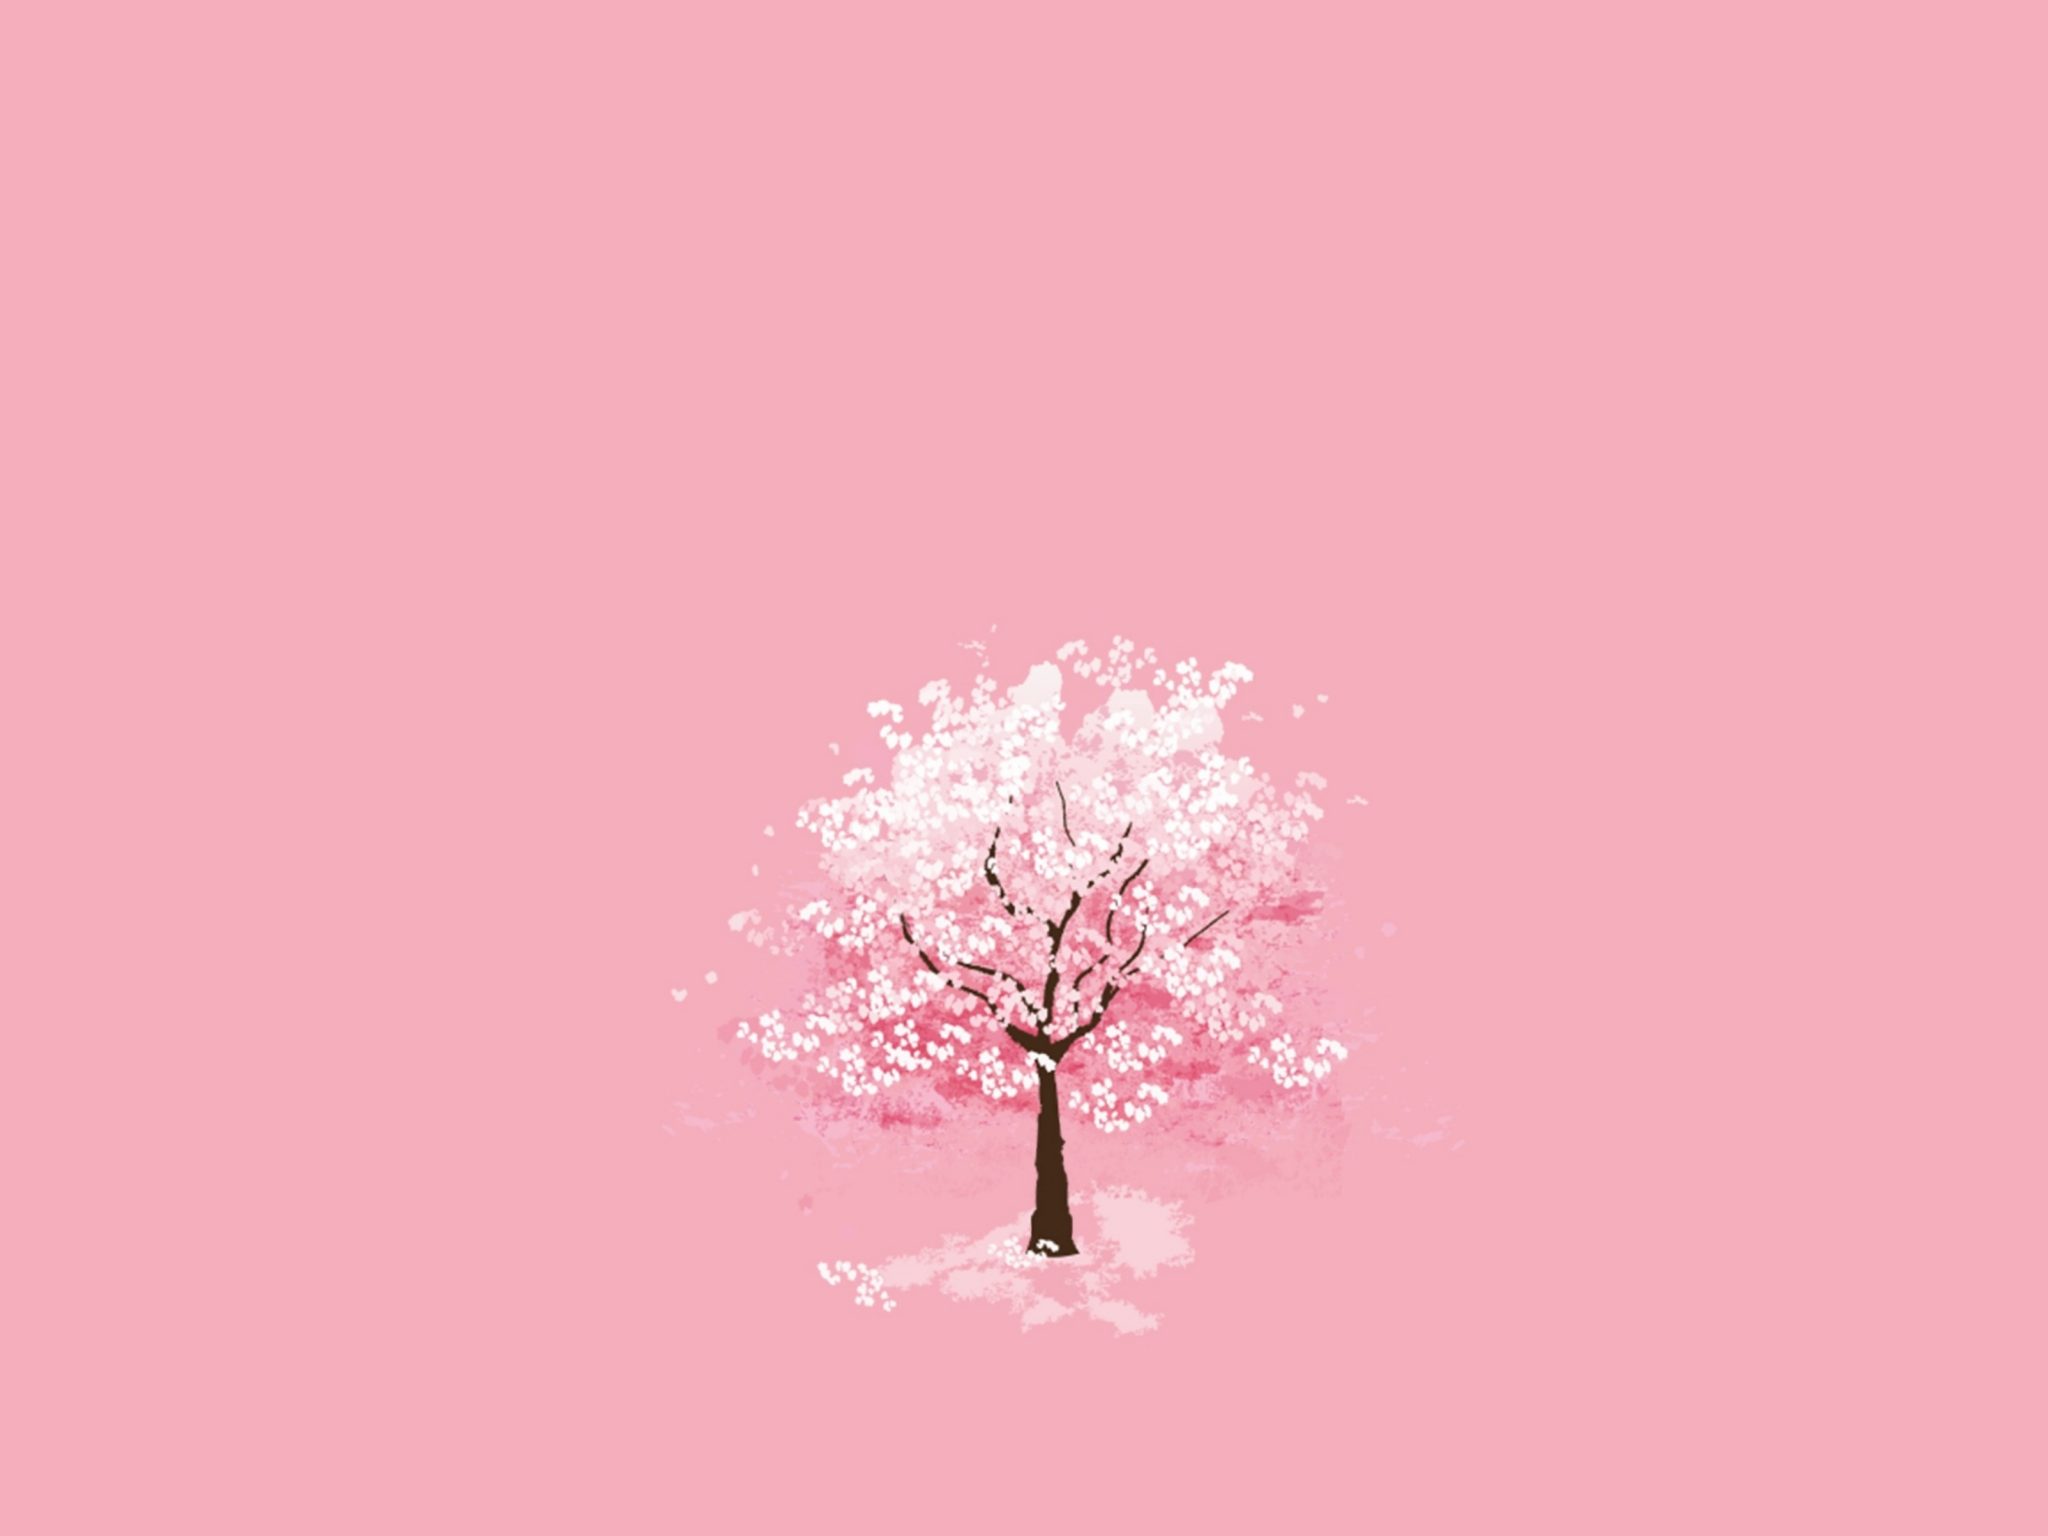 2048x1536 wallpaper Winter Season Tree Pink Background iPad Wallpaper 2048x1536 pixels resolution